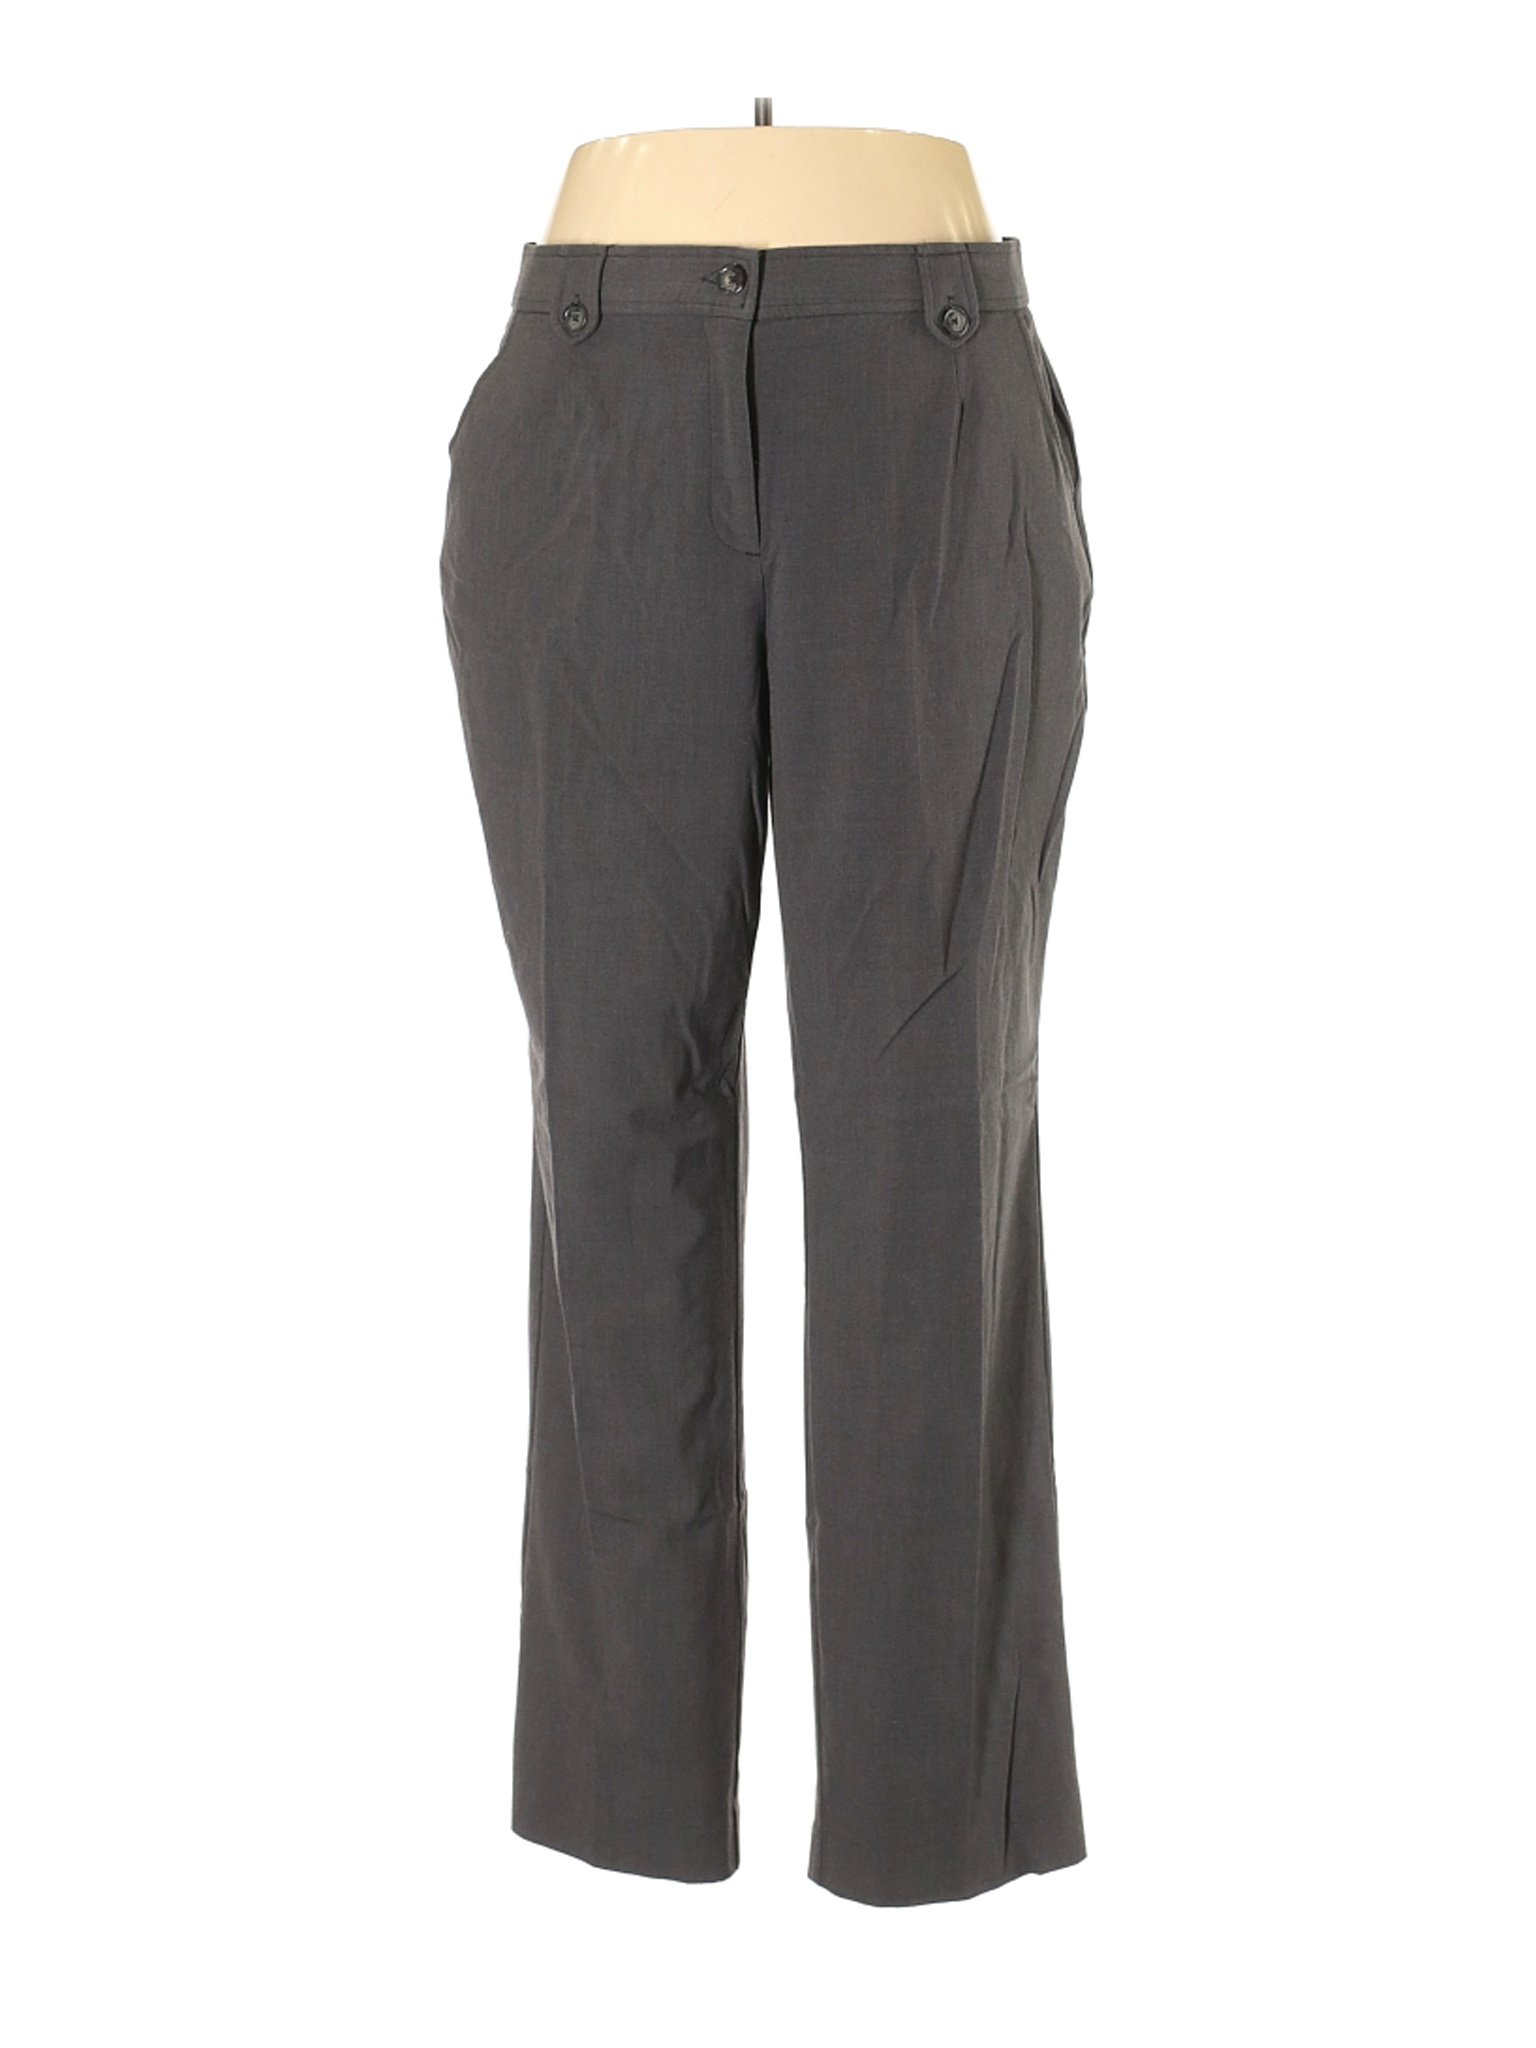 Just My Size Women Gray Dress Pants 14 Plus | eBay